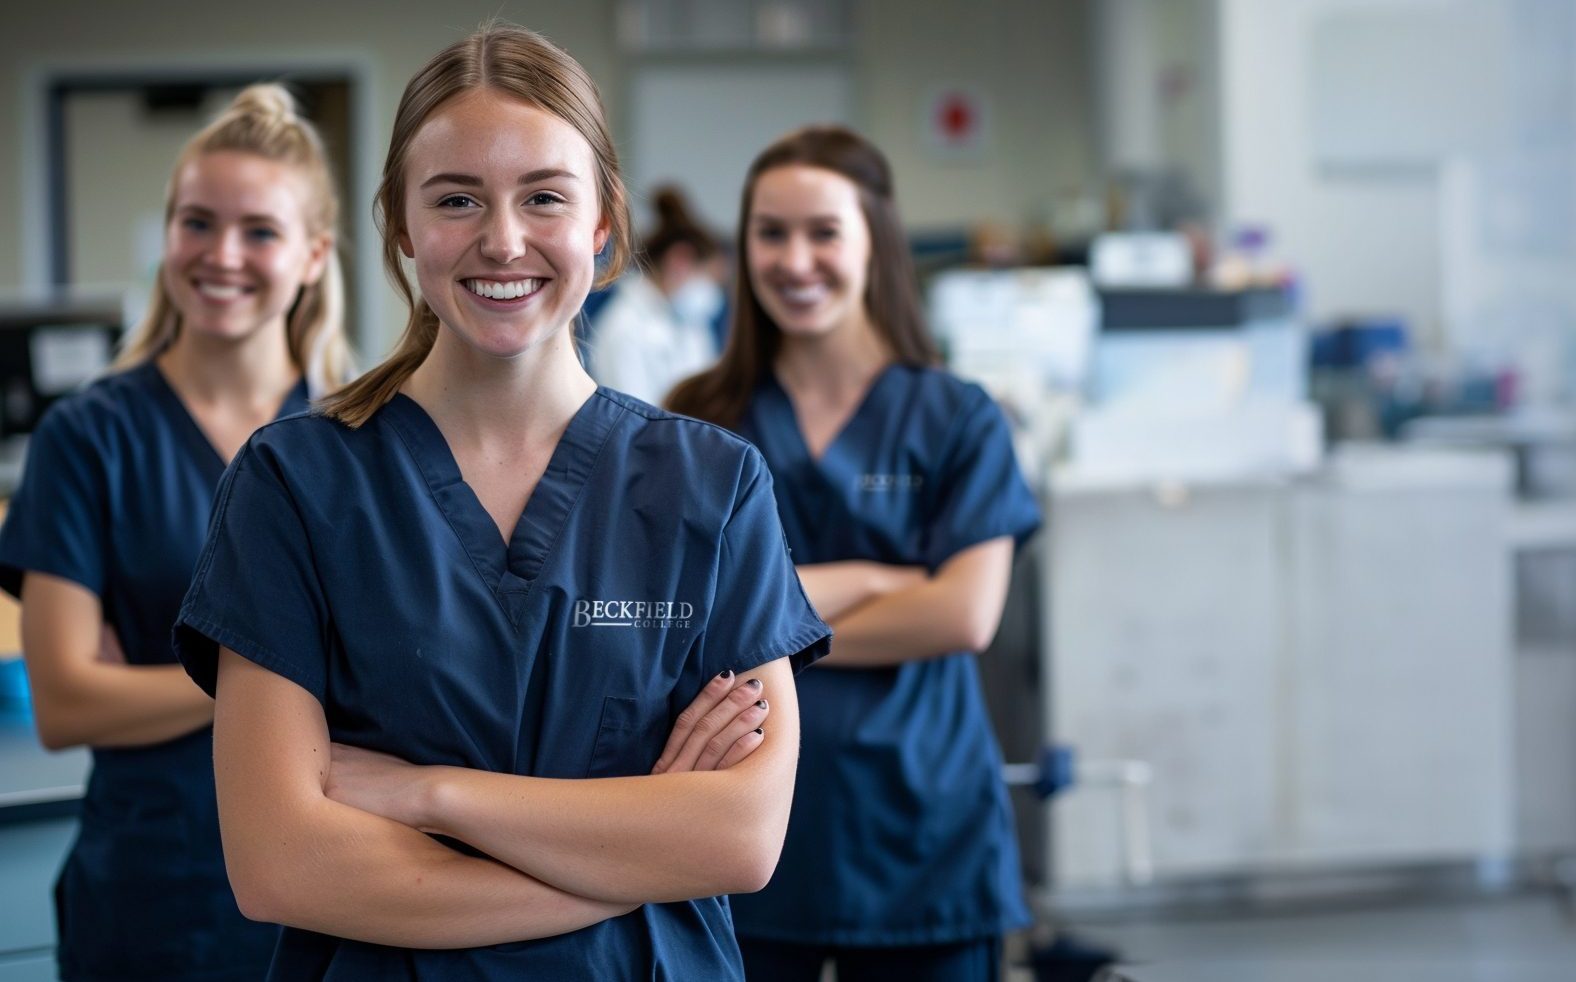 3 Nursing students at Beckfield College